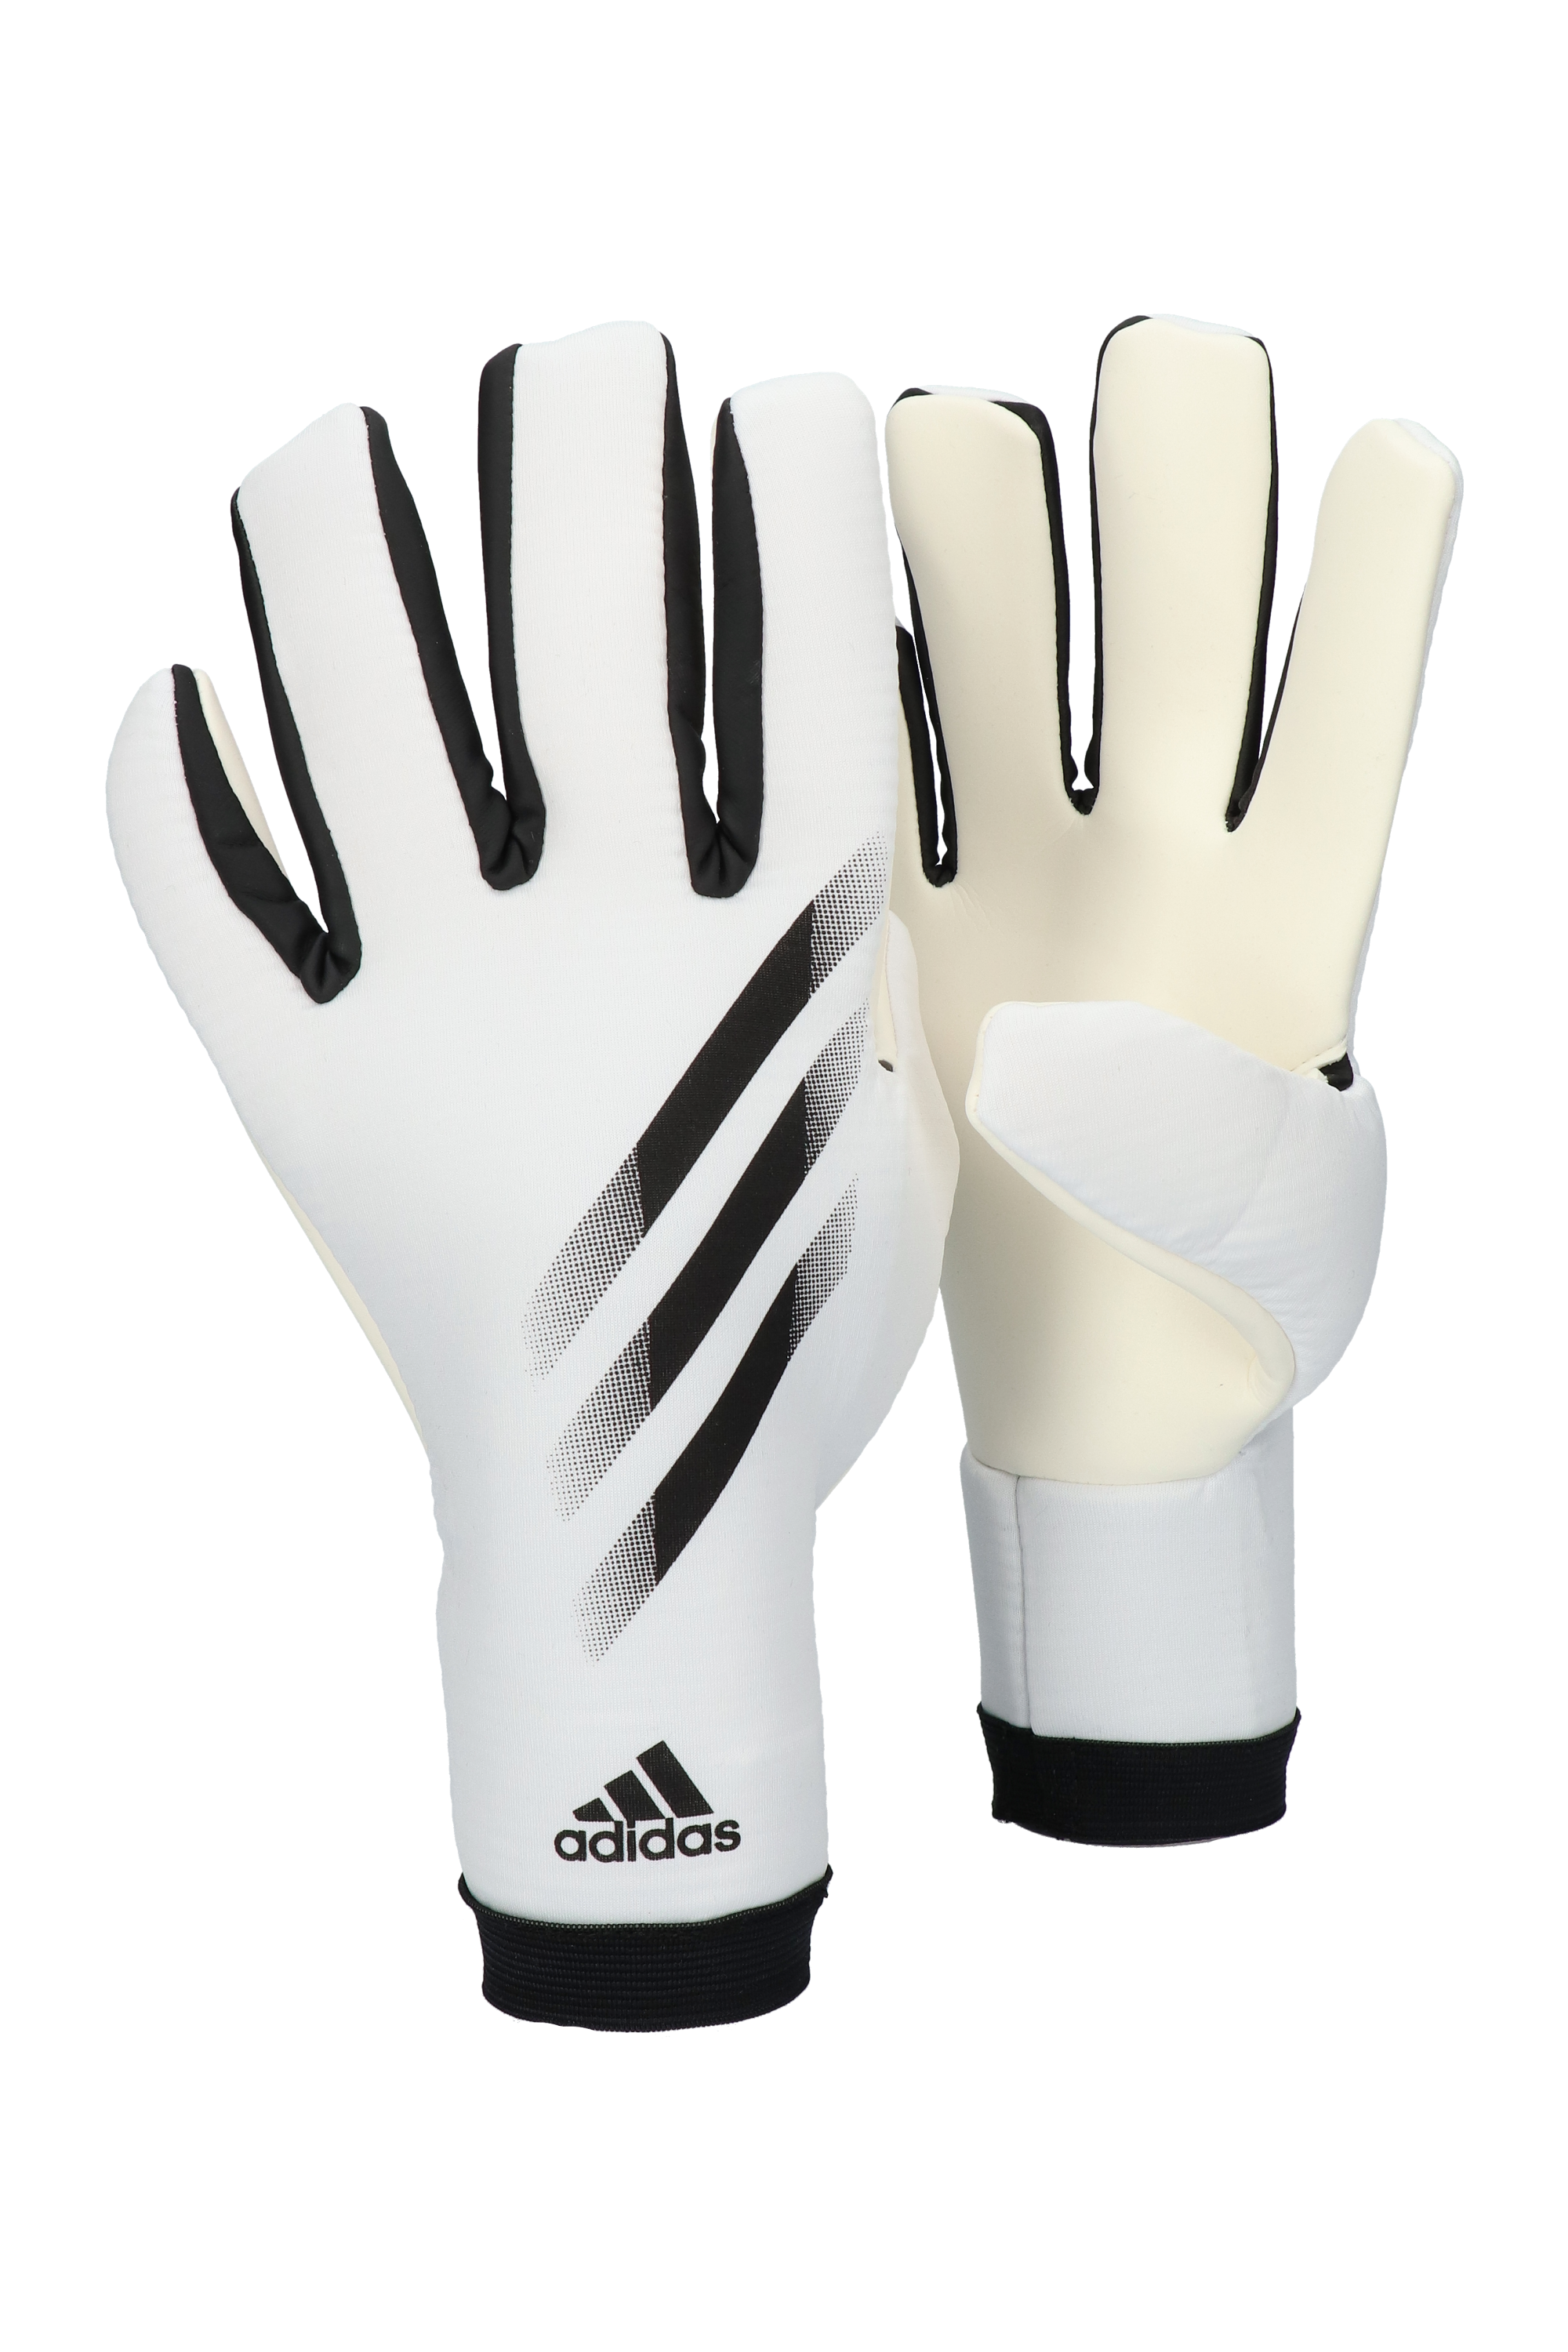 Goalkeeper Gloves Adidas X Gl Training R Gol Com Football Boots Equipment